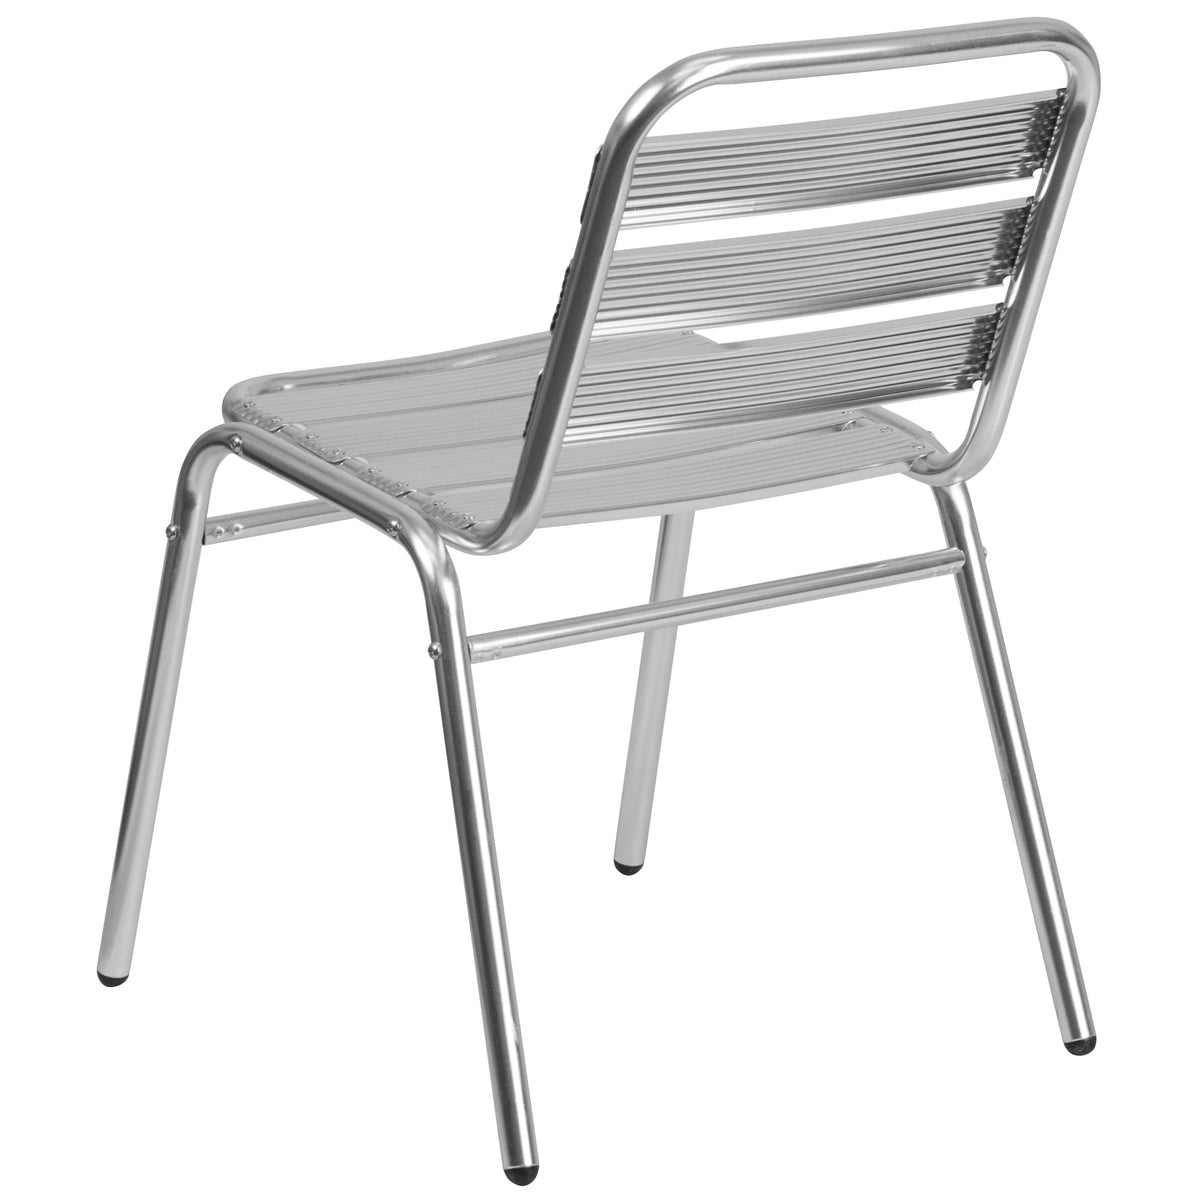 Aluminum |#| Commercial Aluminum Indoor-Outdoor Restaurant Stack Chair with Triple Slat Back